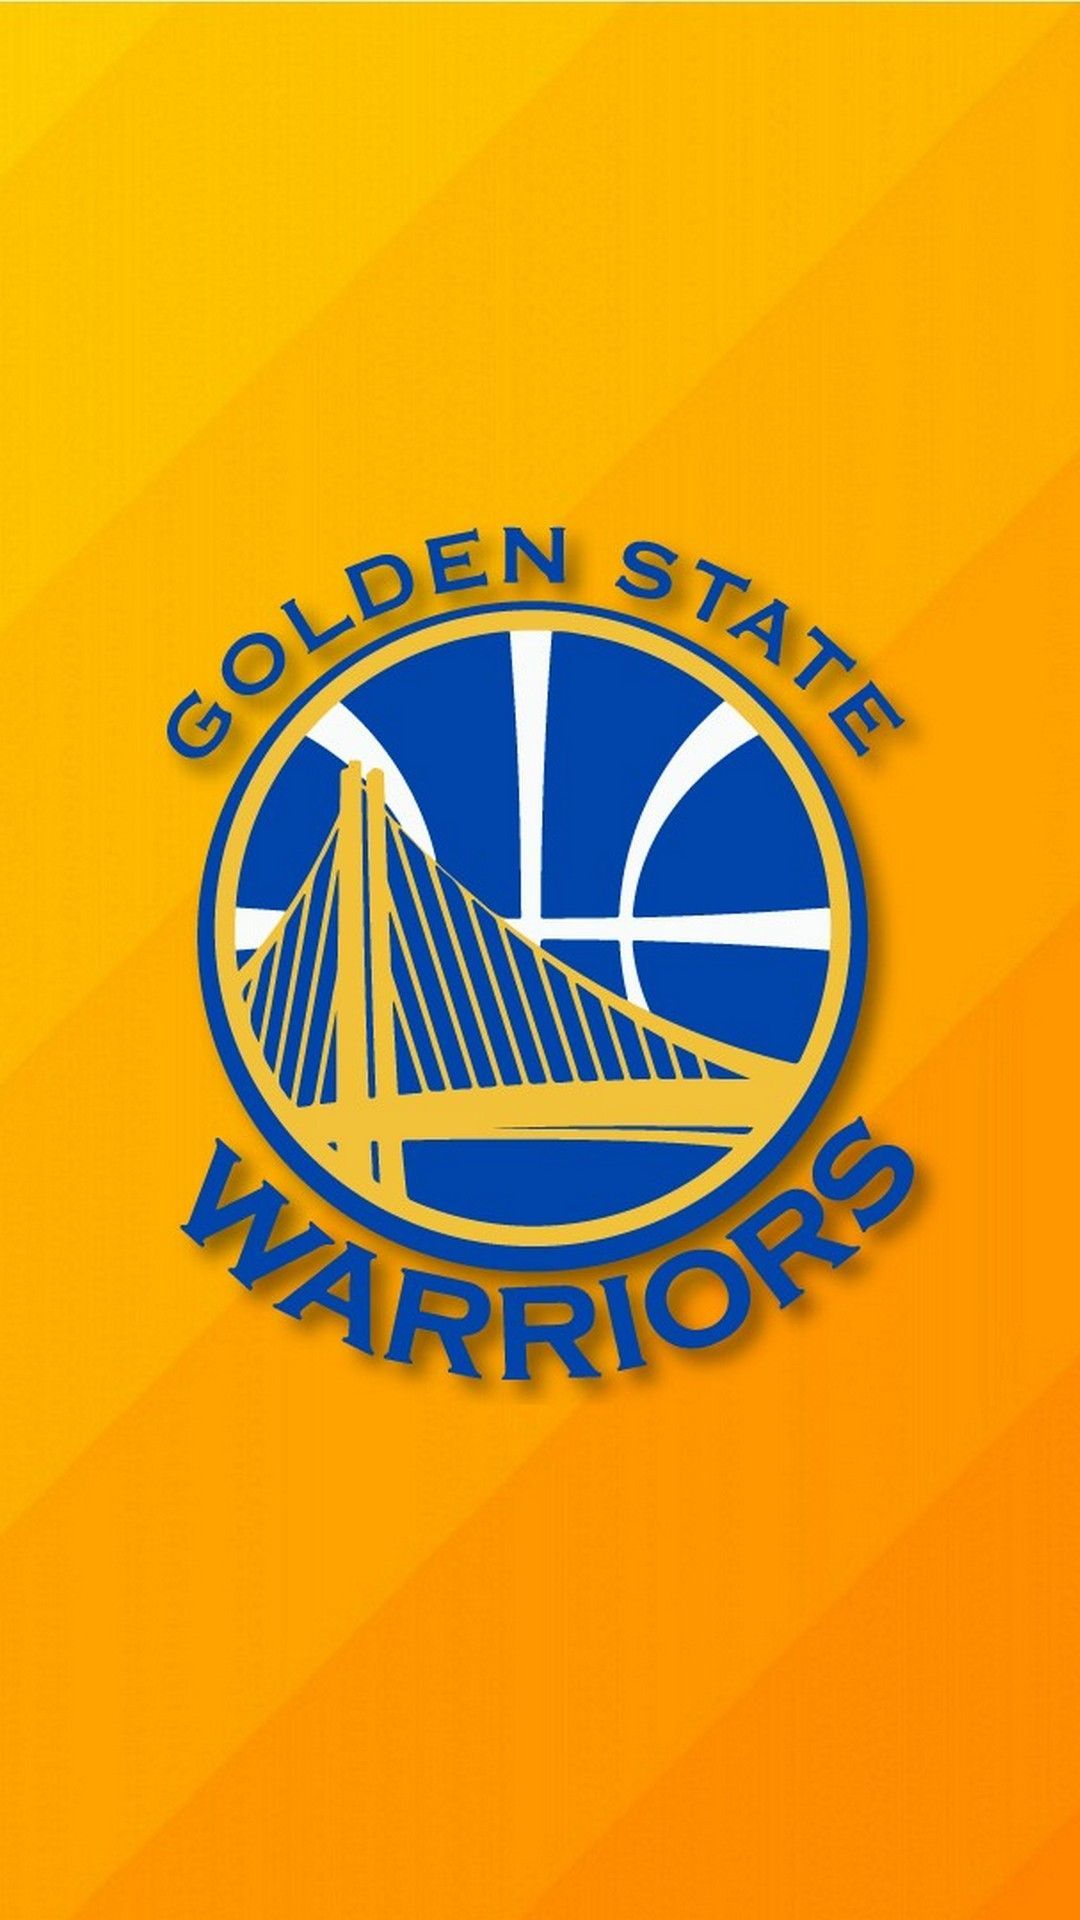 2022 Golden State Warriors Wallpapers - Wallpaper Cave